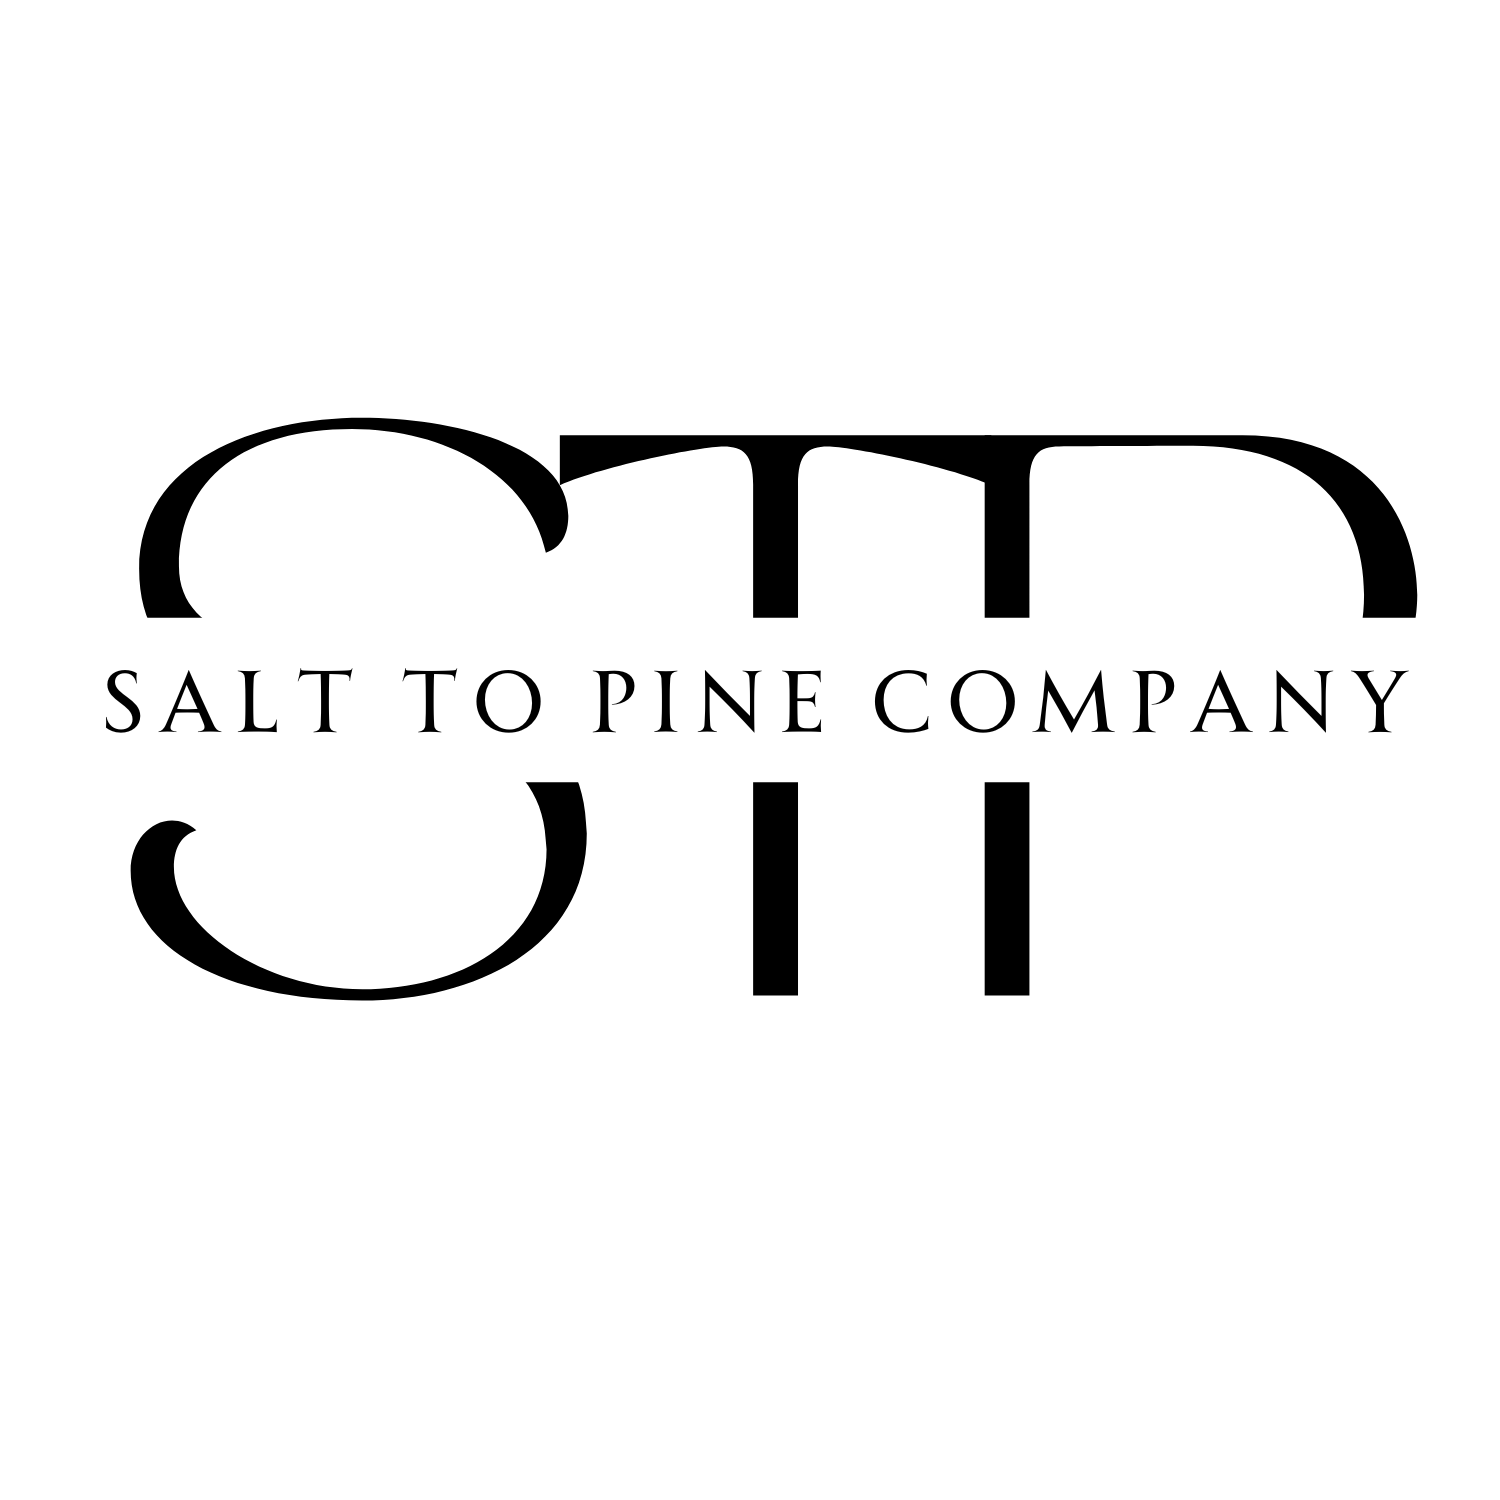 Salt to Pine Company